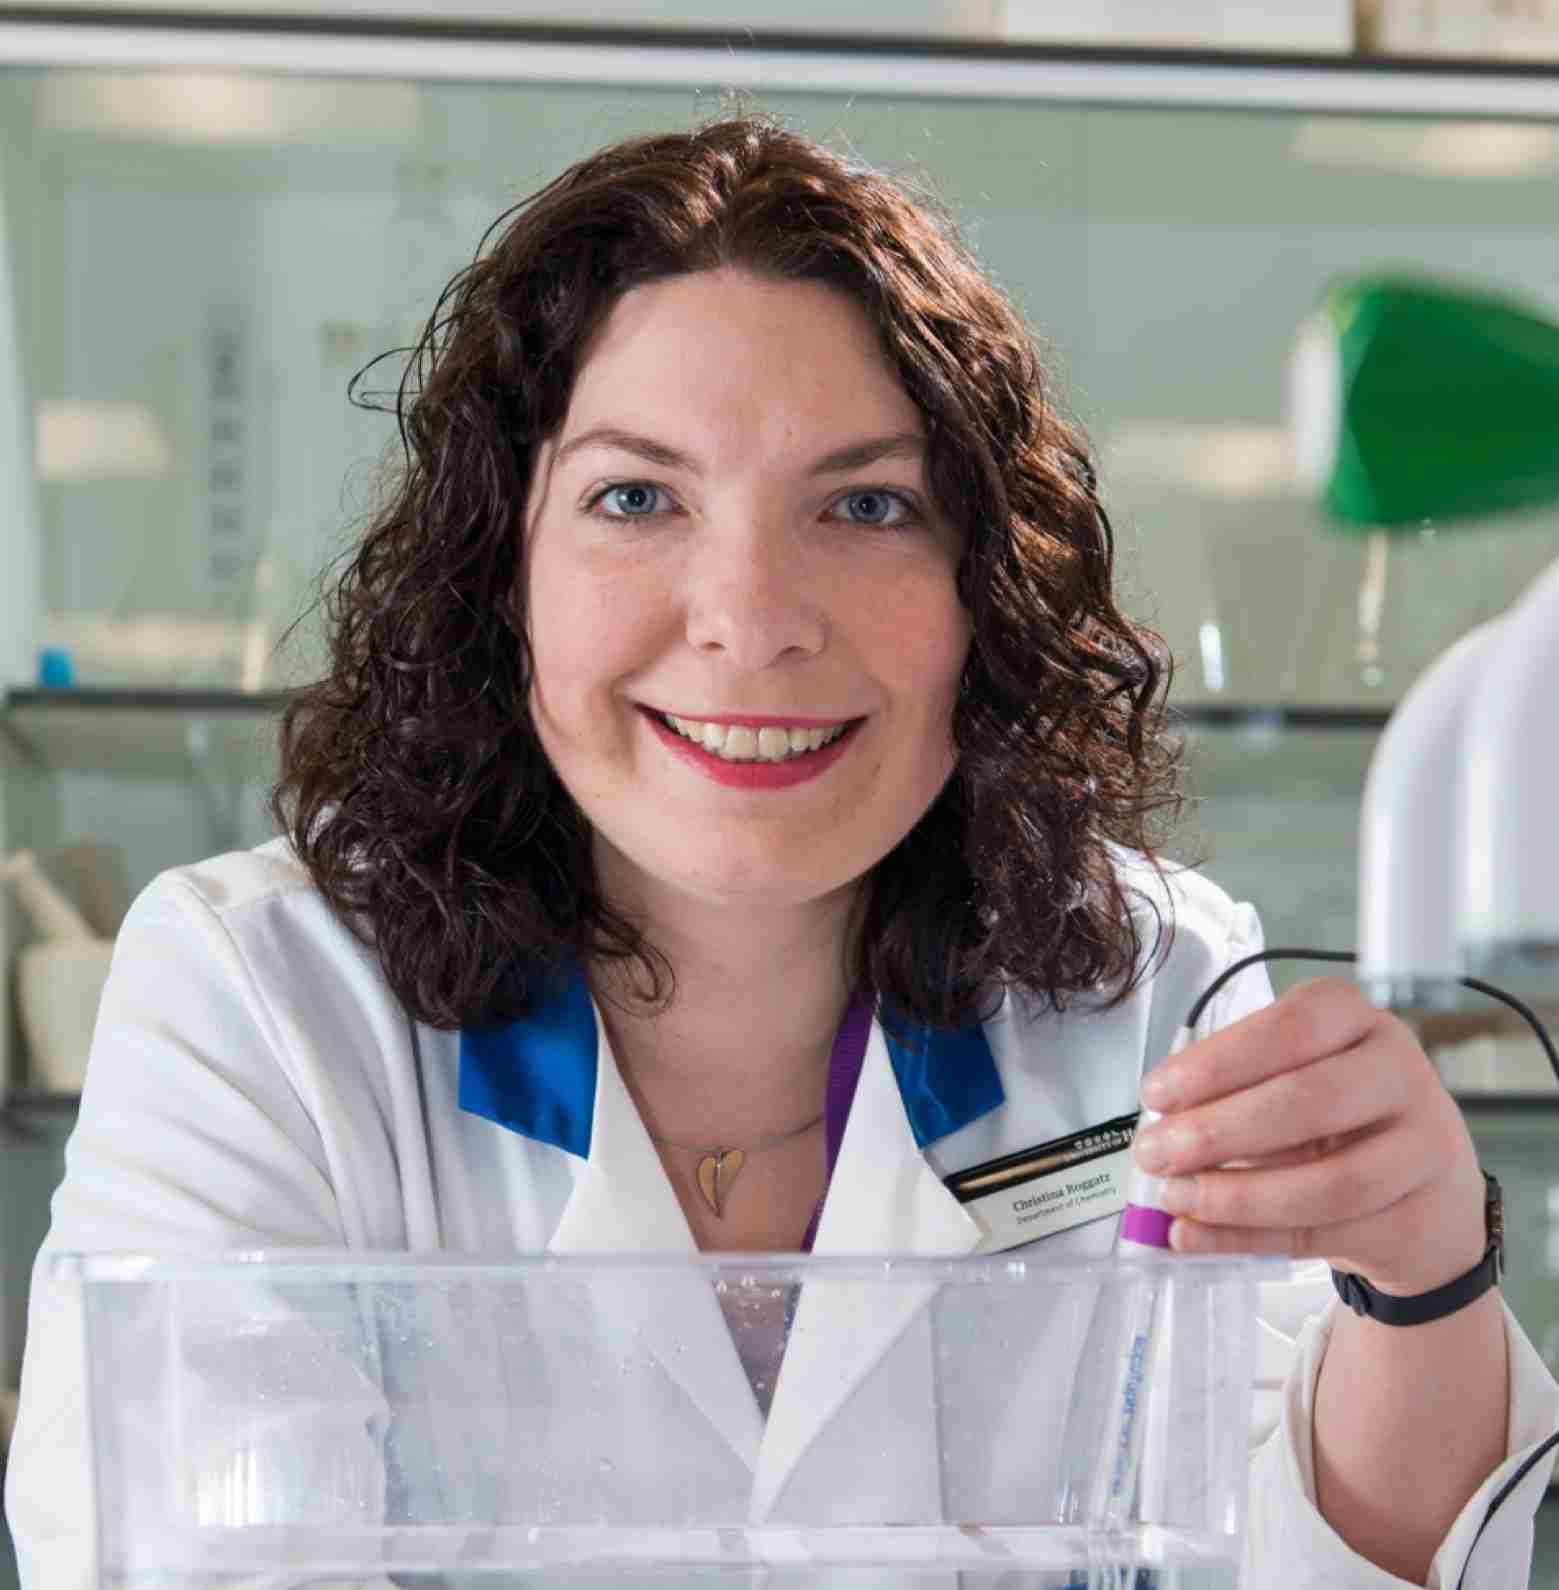 Profile image of Dr Christina Roggatz